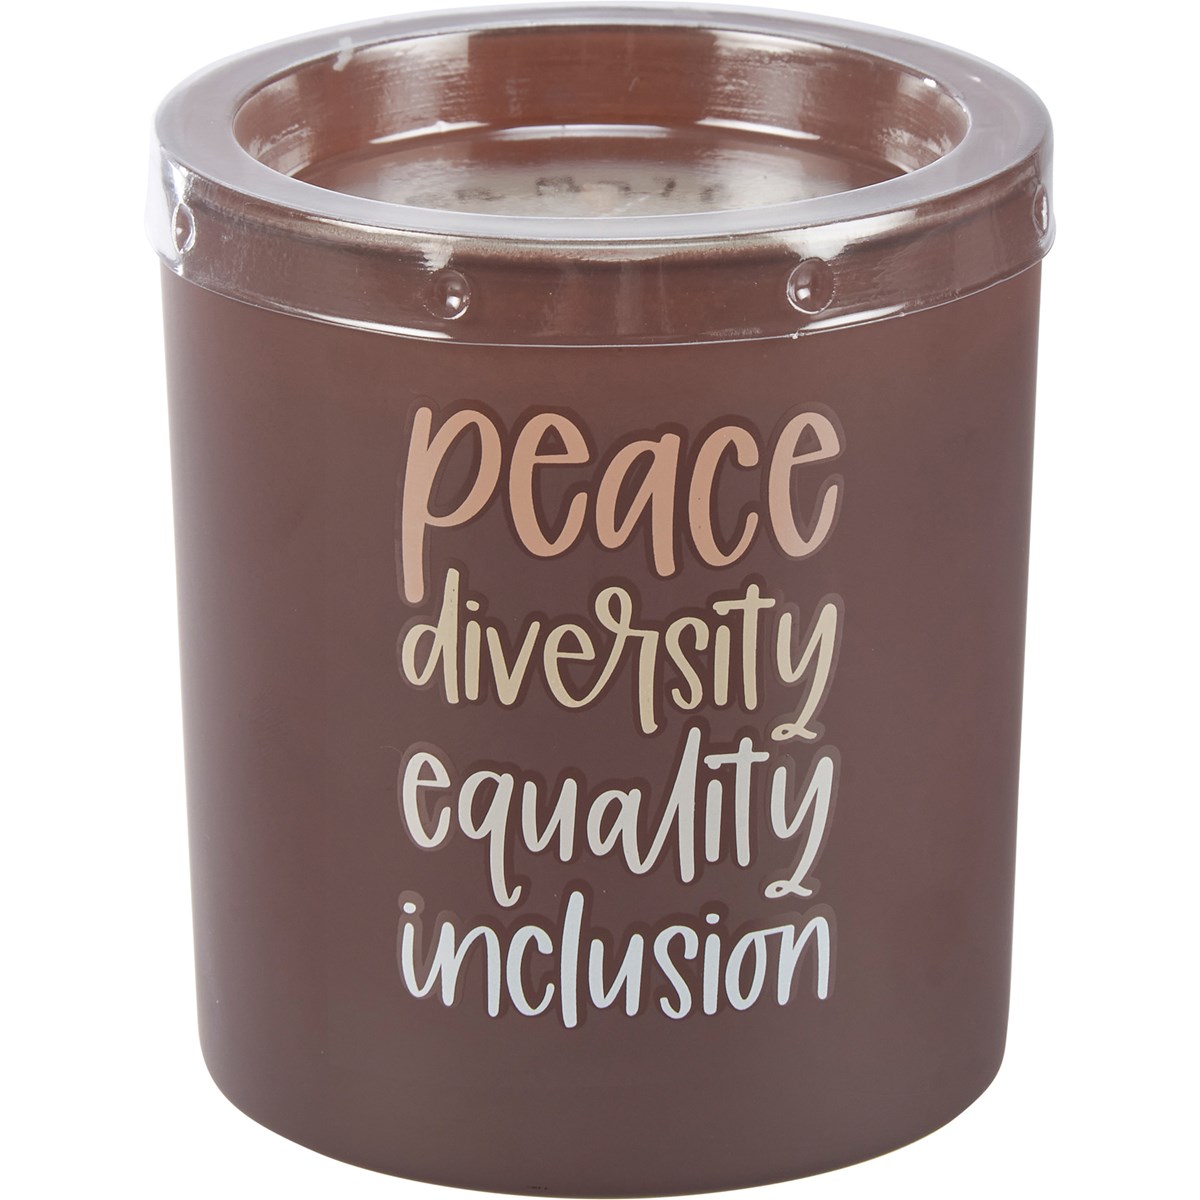 Jar Candle - Kindness Peace Diversity - 8 oz., 3.25" Diameter x 3.50" - Soy Wax, Glass, Cotton